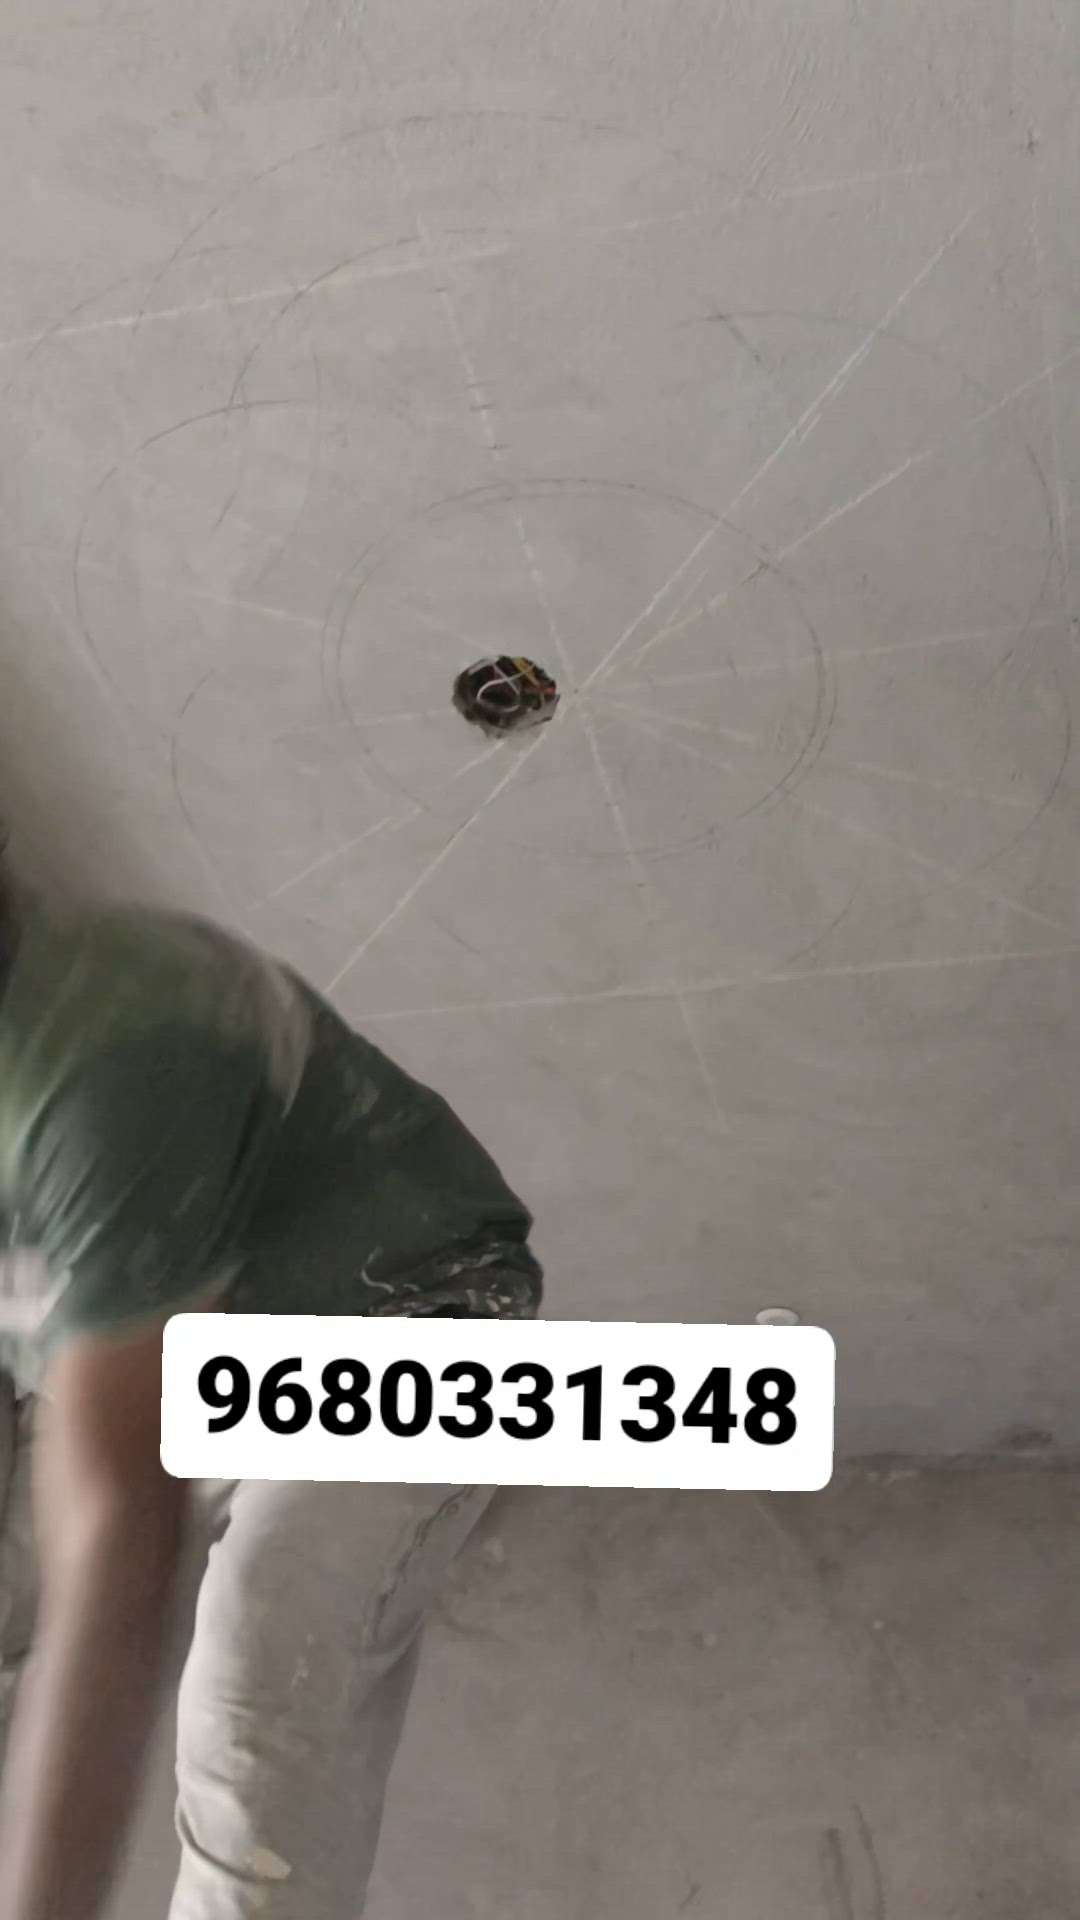 mines Plus fore sealing gypsum board PVC ceiling murga jali karvane ke liye sampark Karen Fatehpur Shekhawati khokar pop contact number 9680331348 9351114757